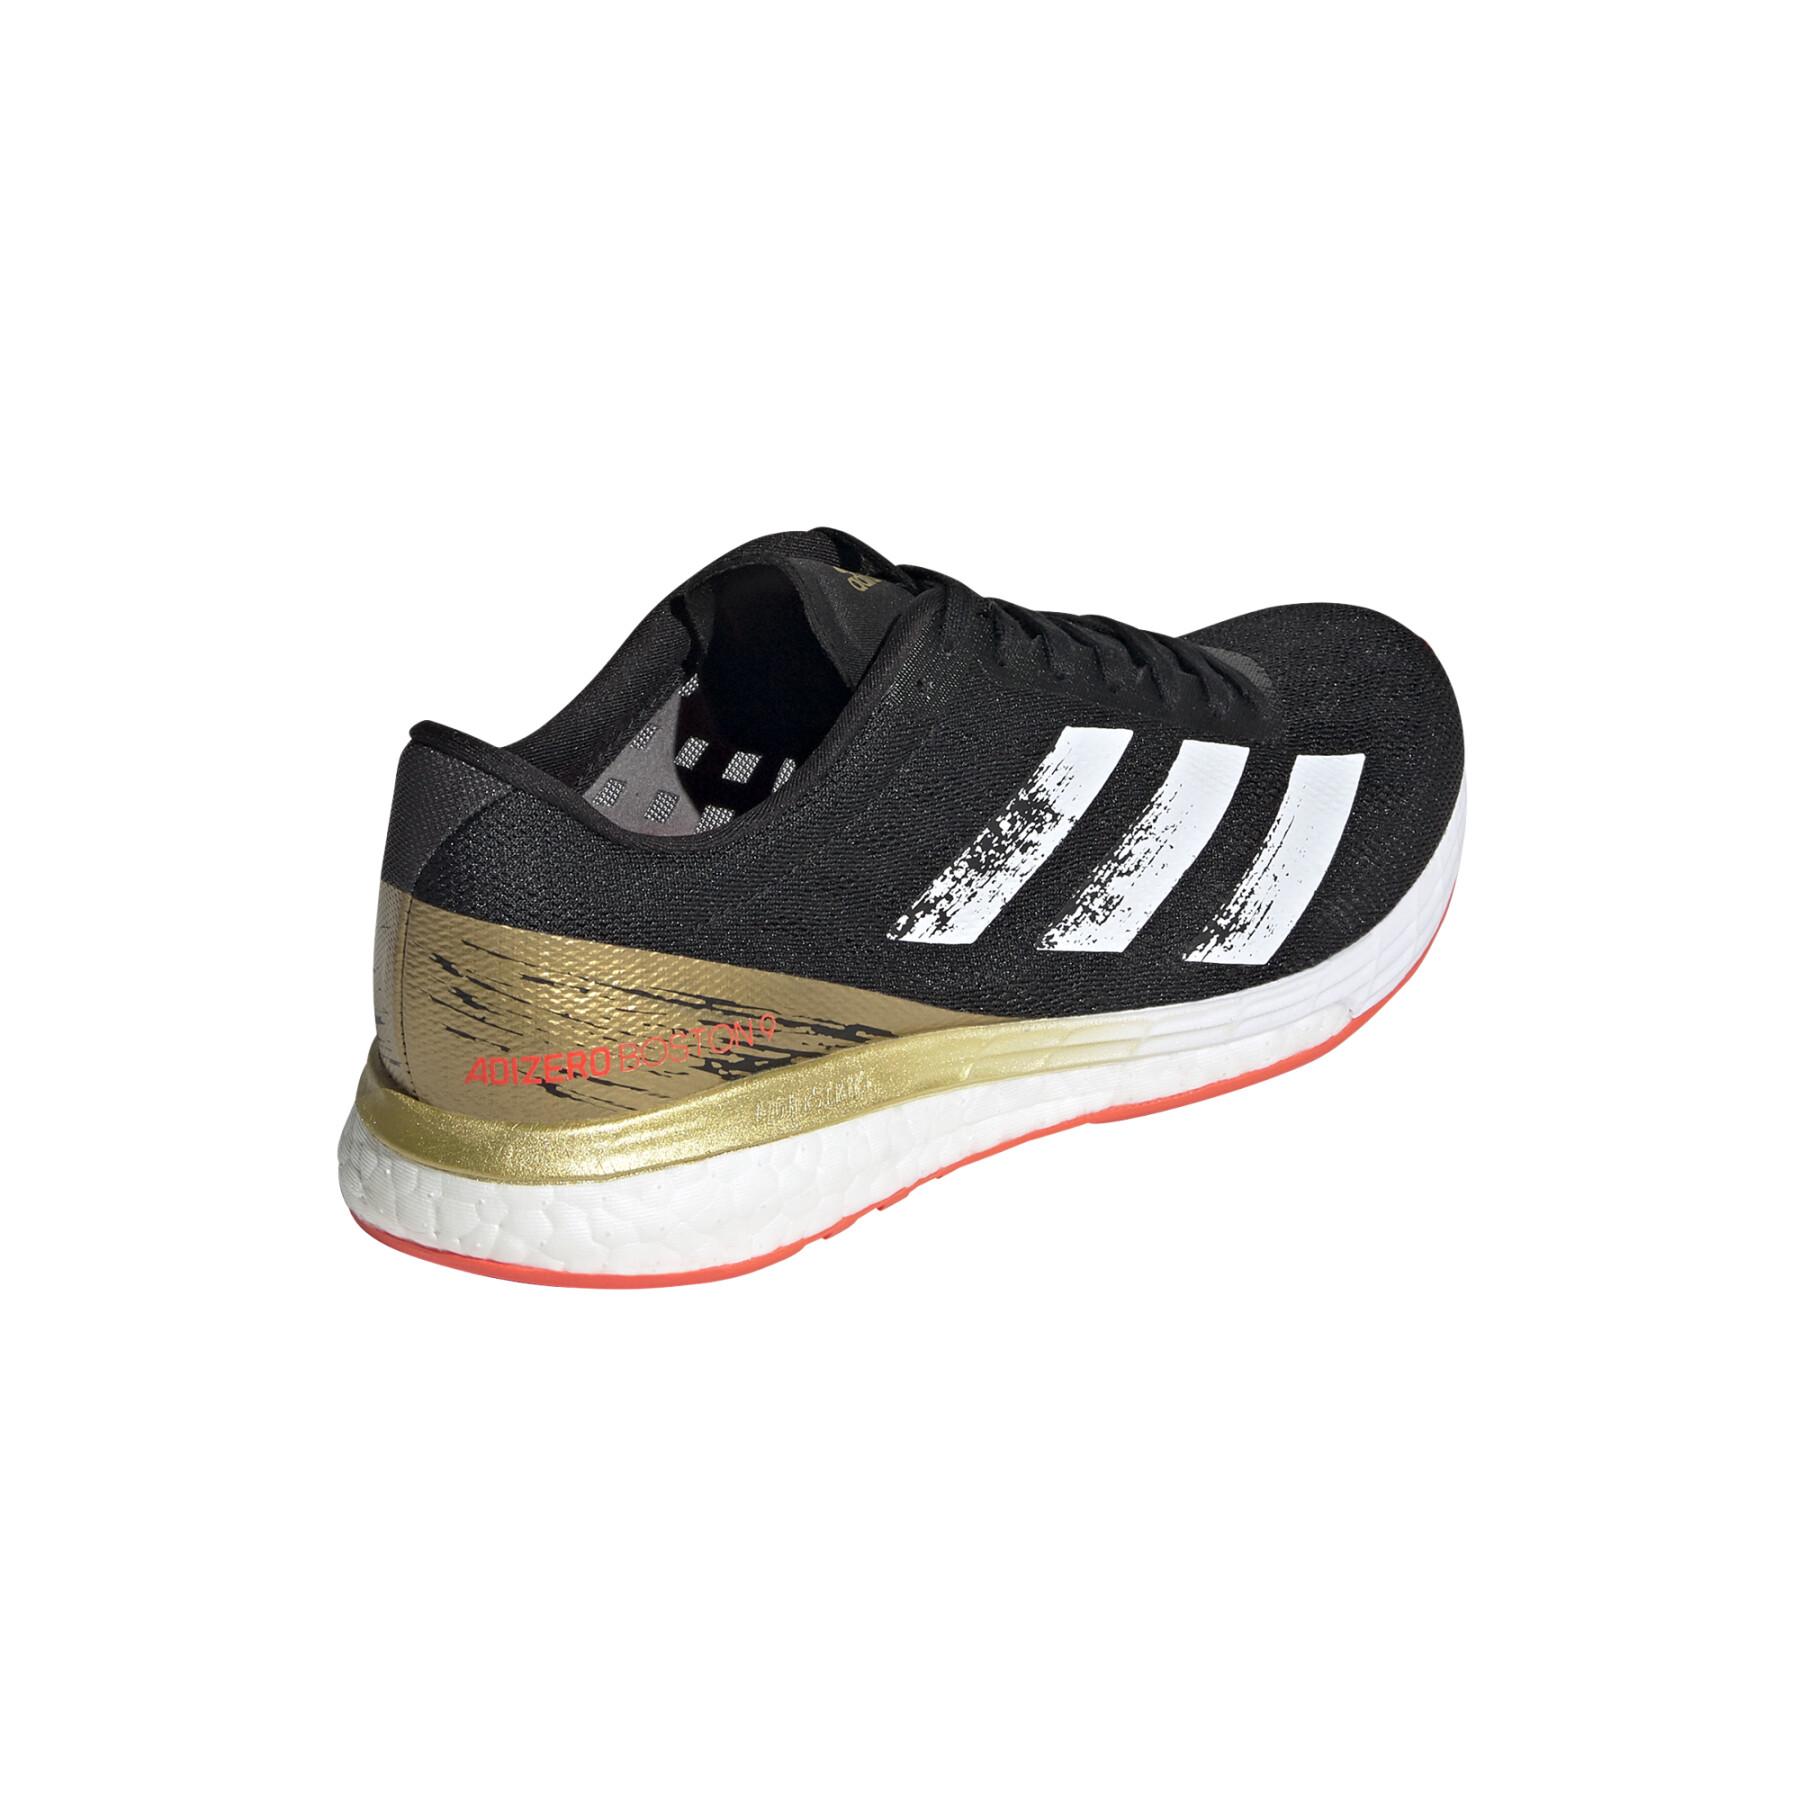 Chaussures de running femme adidas Adizero Boston xa09